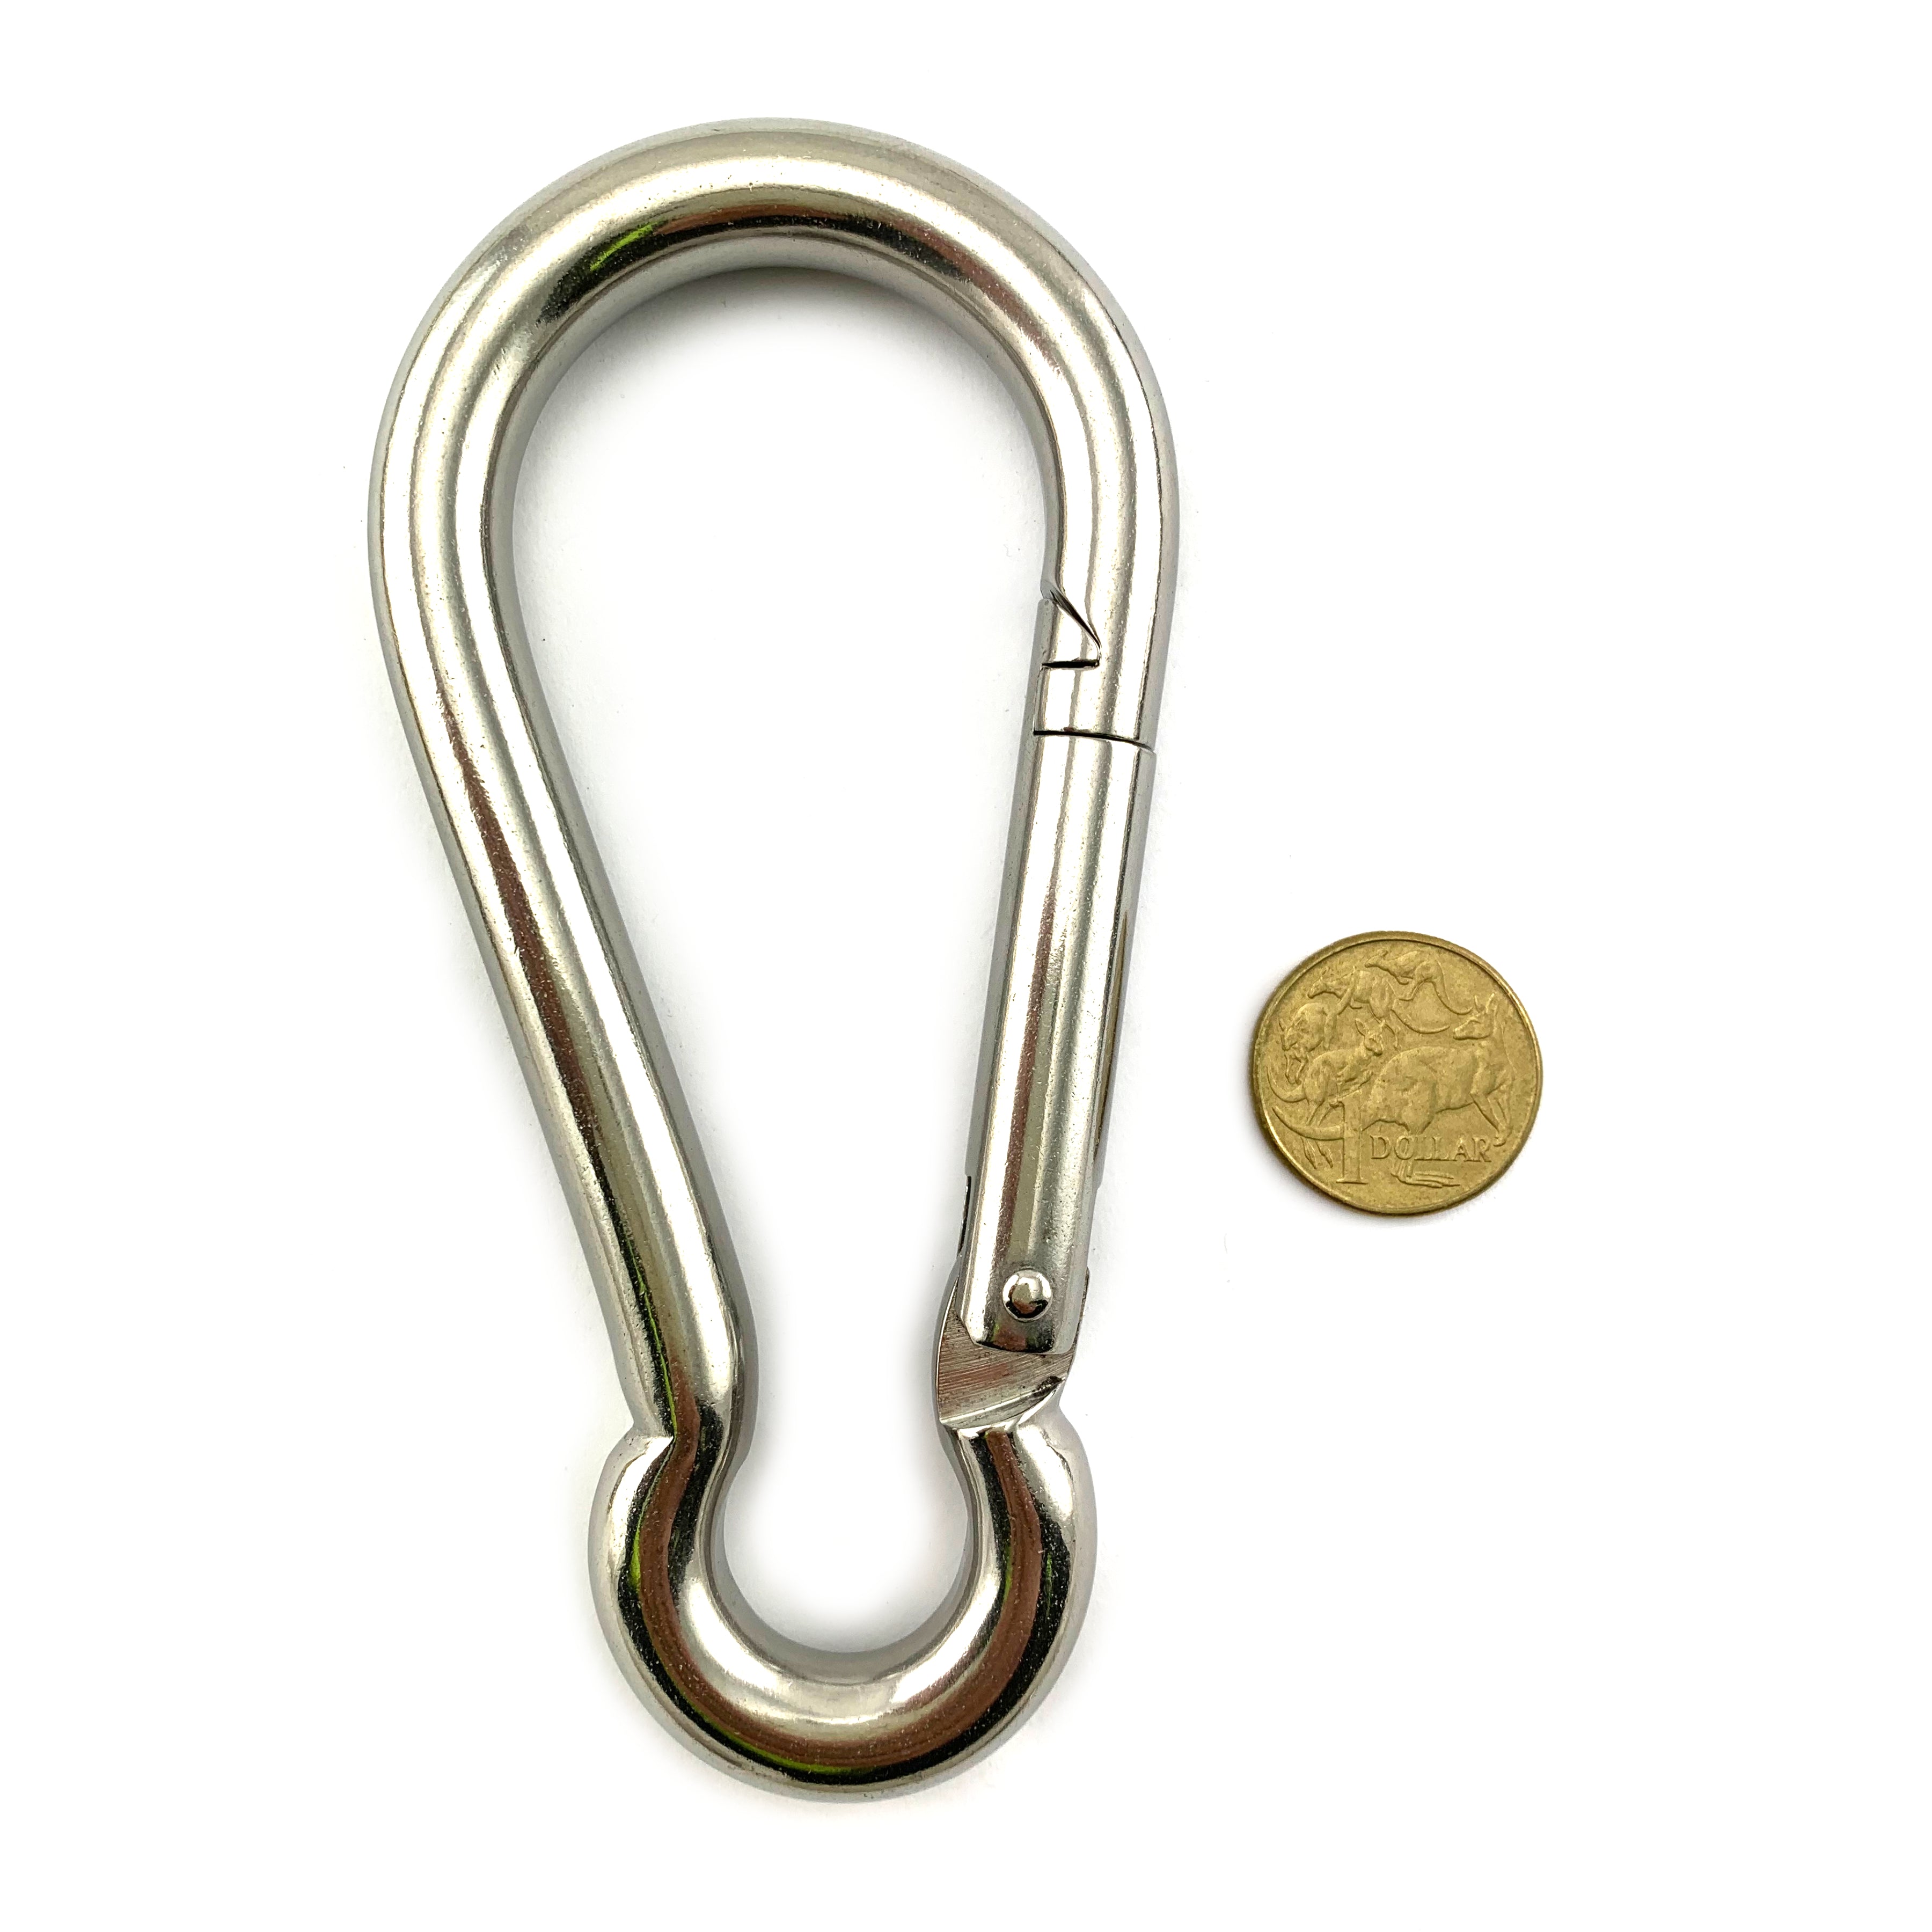 Snap hook in marine grade type 316 stainless steel, size 12mm. Australia.